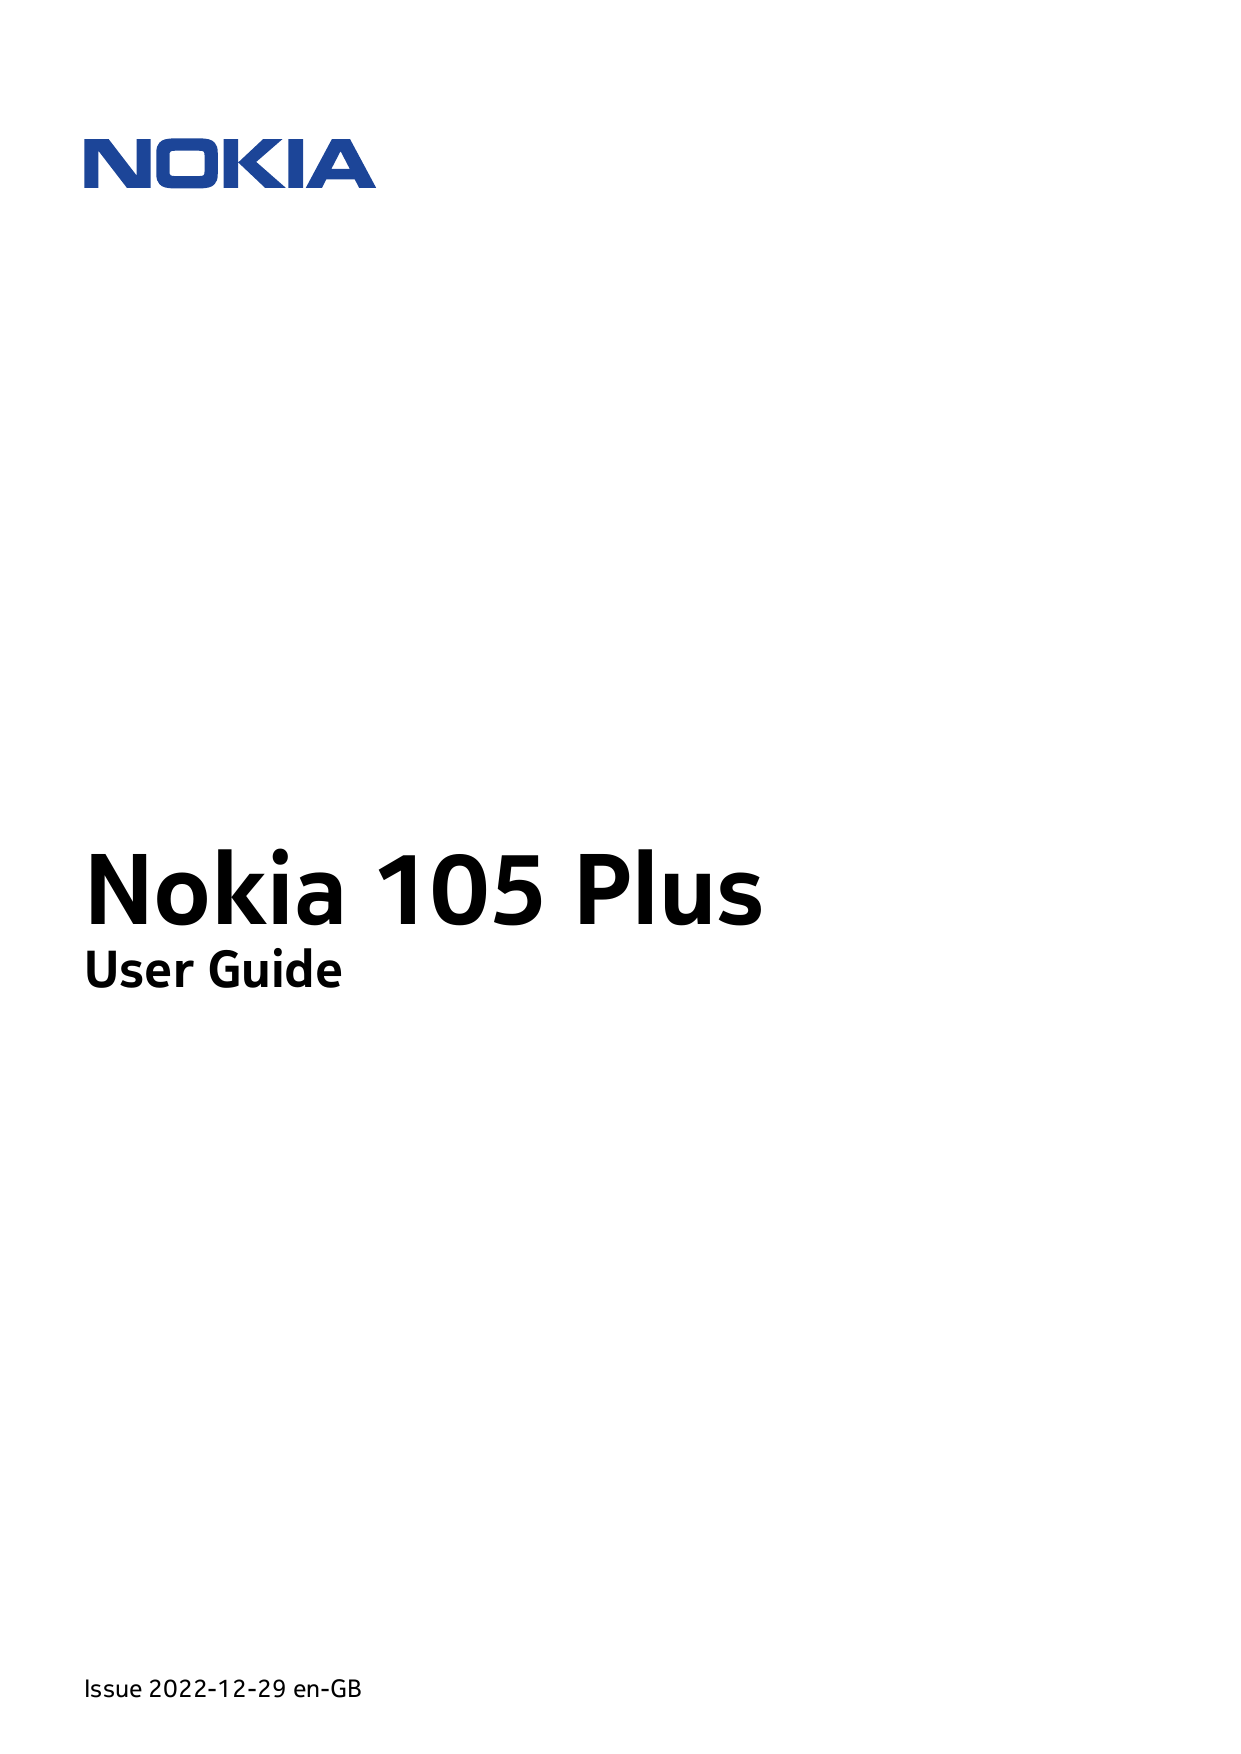 Nokia 105 PlusUser GuideIssue 2022-12-29 en-GB